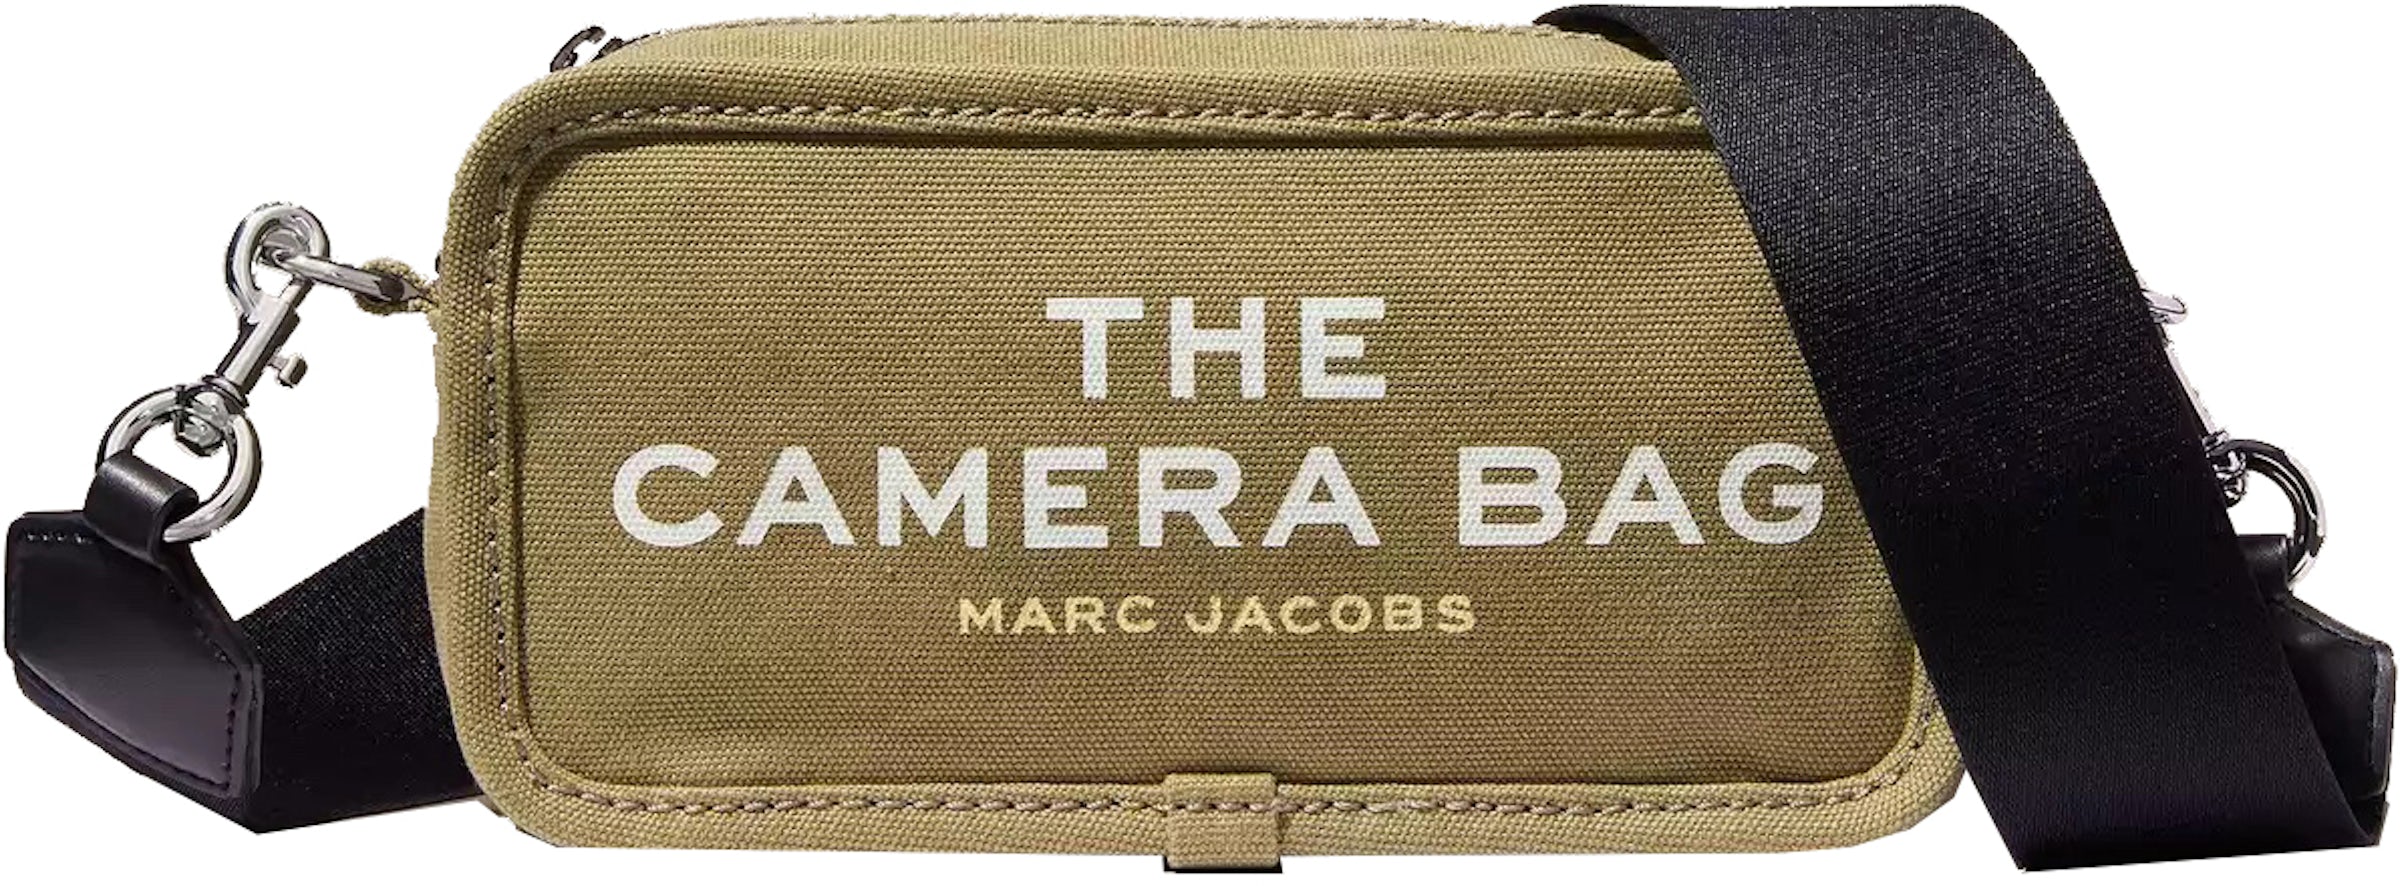 Marc Jacobs Women's The Camera Bag - Slate Green